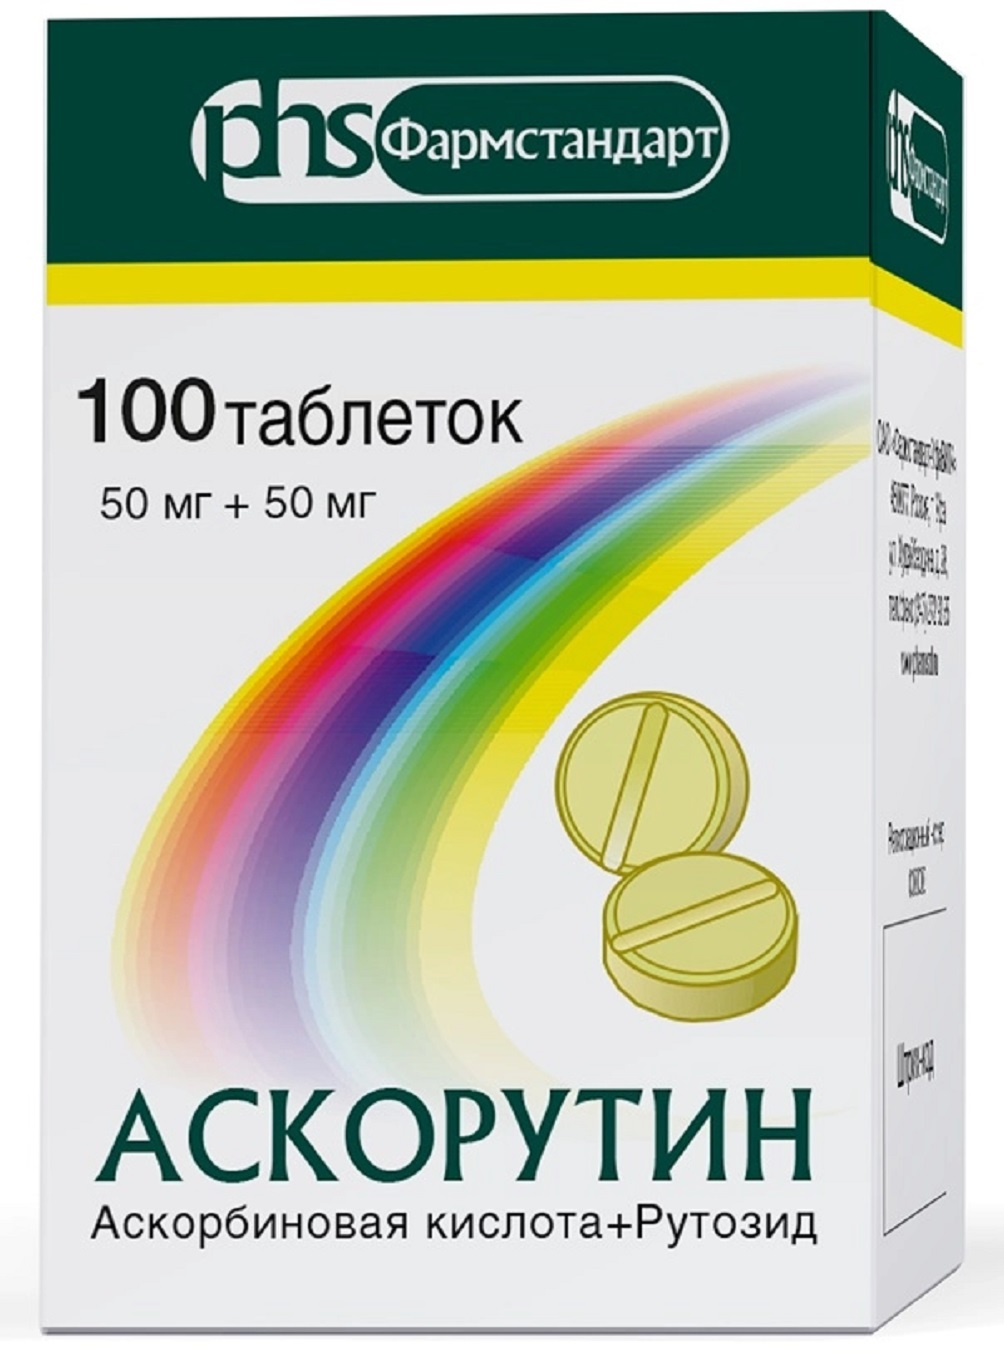 Аскорутин, таблетки 50 мг + 50 мг, 100 шт. аскорбиновая кислота с глюкозой таблетки 20шт